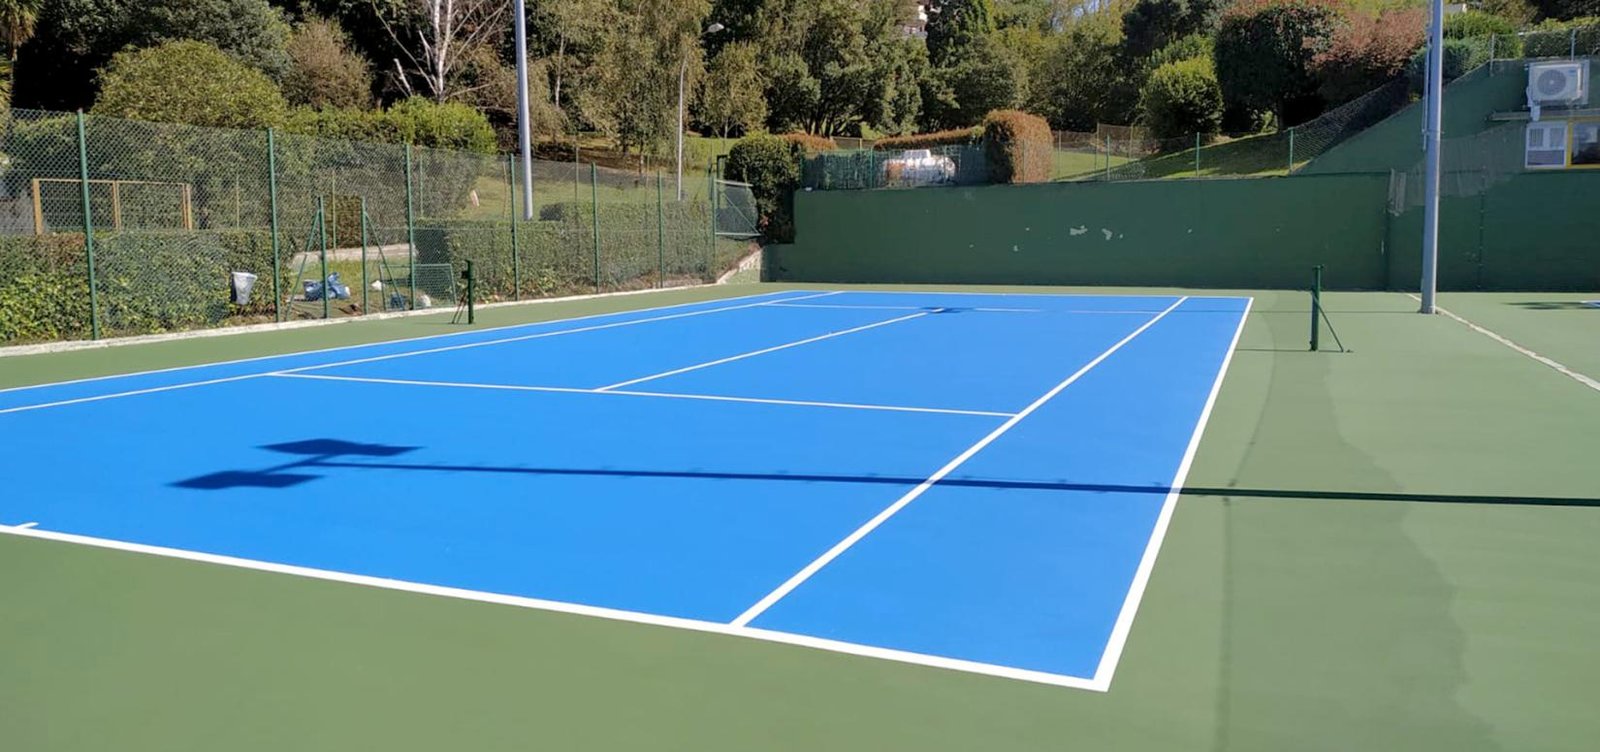 Atletic Tennis Club,  San Sebastian - Tennis court installation 02